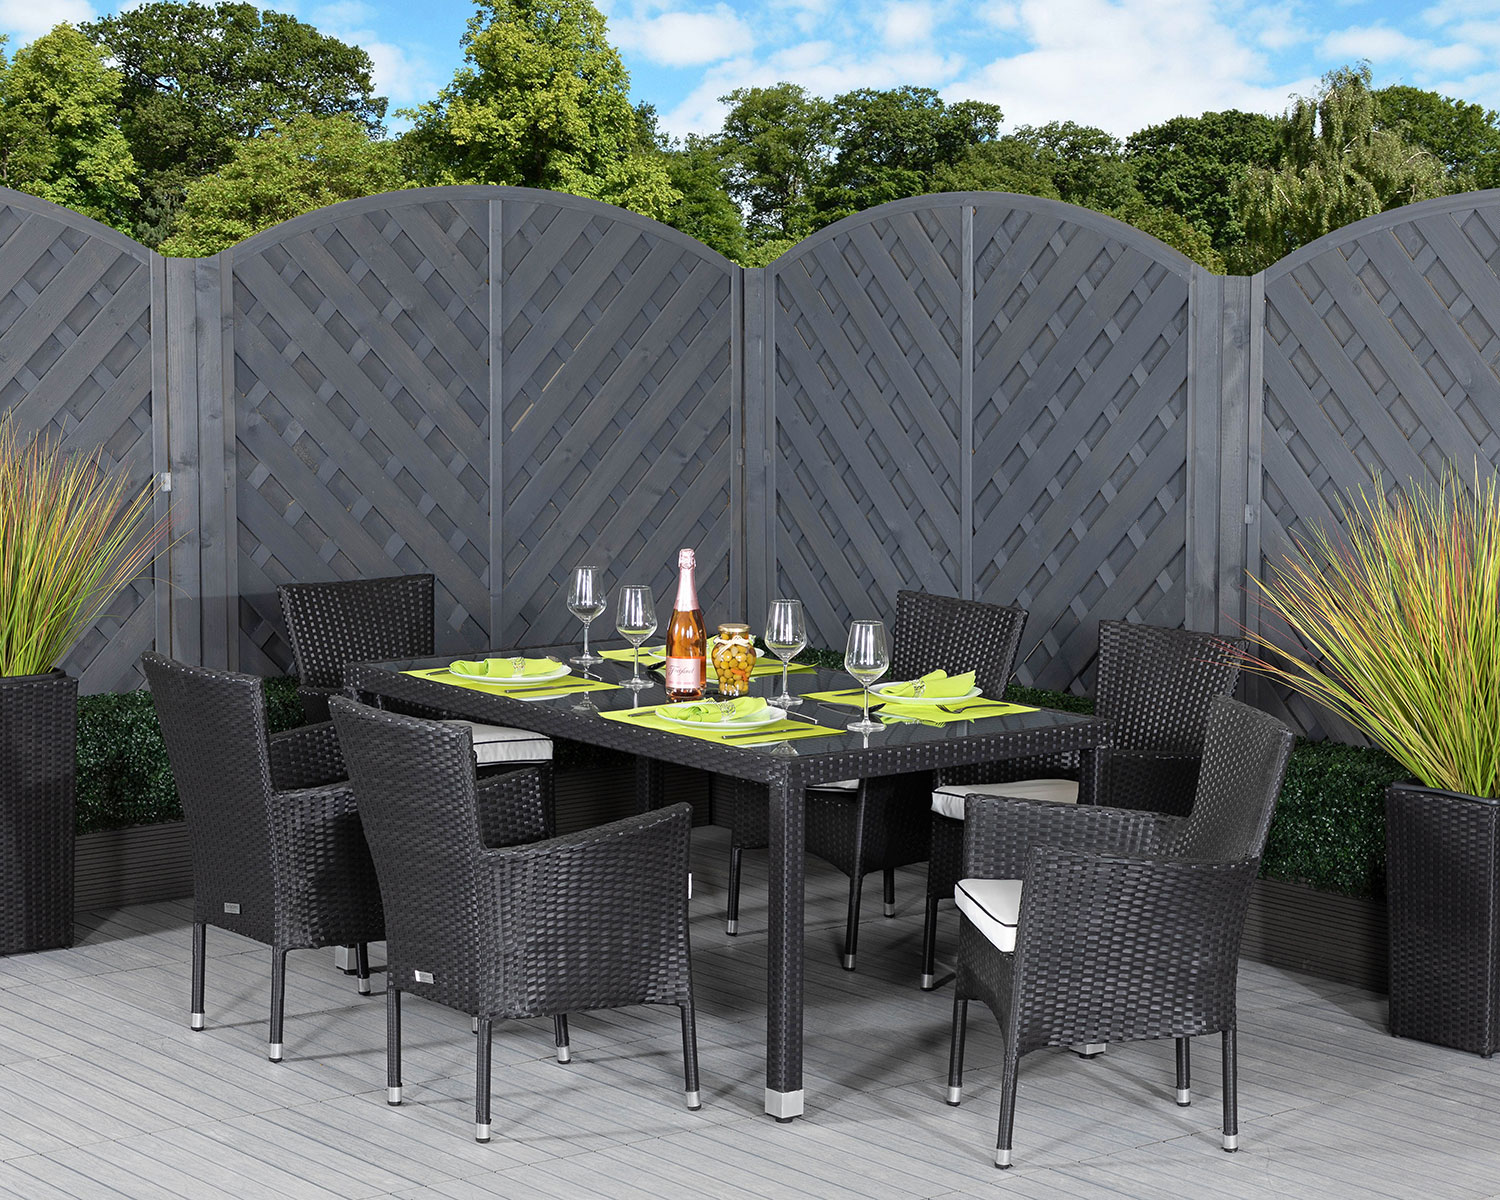 6 Seat Rattan Garden Dining Set With Open Leg Rectangular Table In Black Amp White Cambridge Rattan Direct